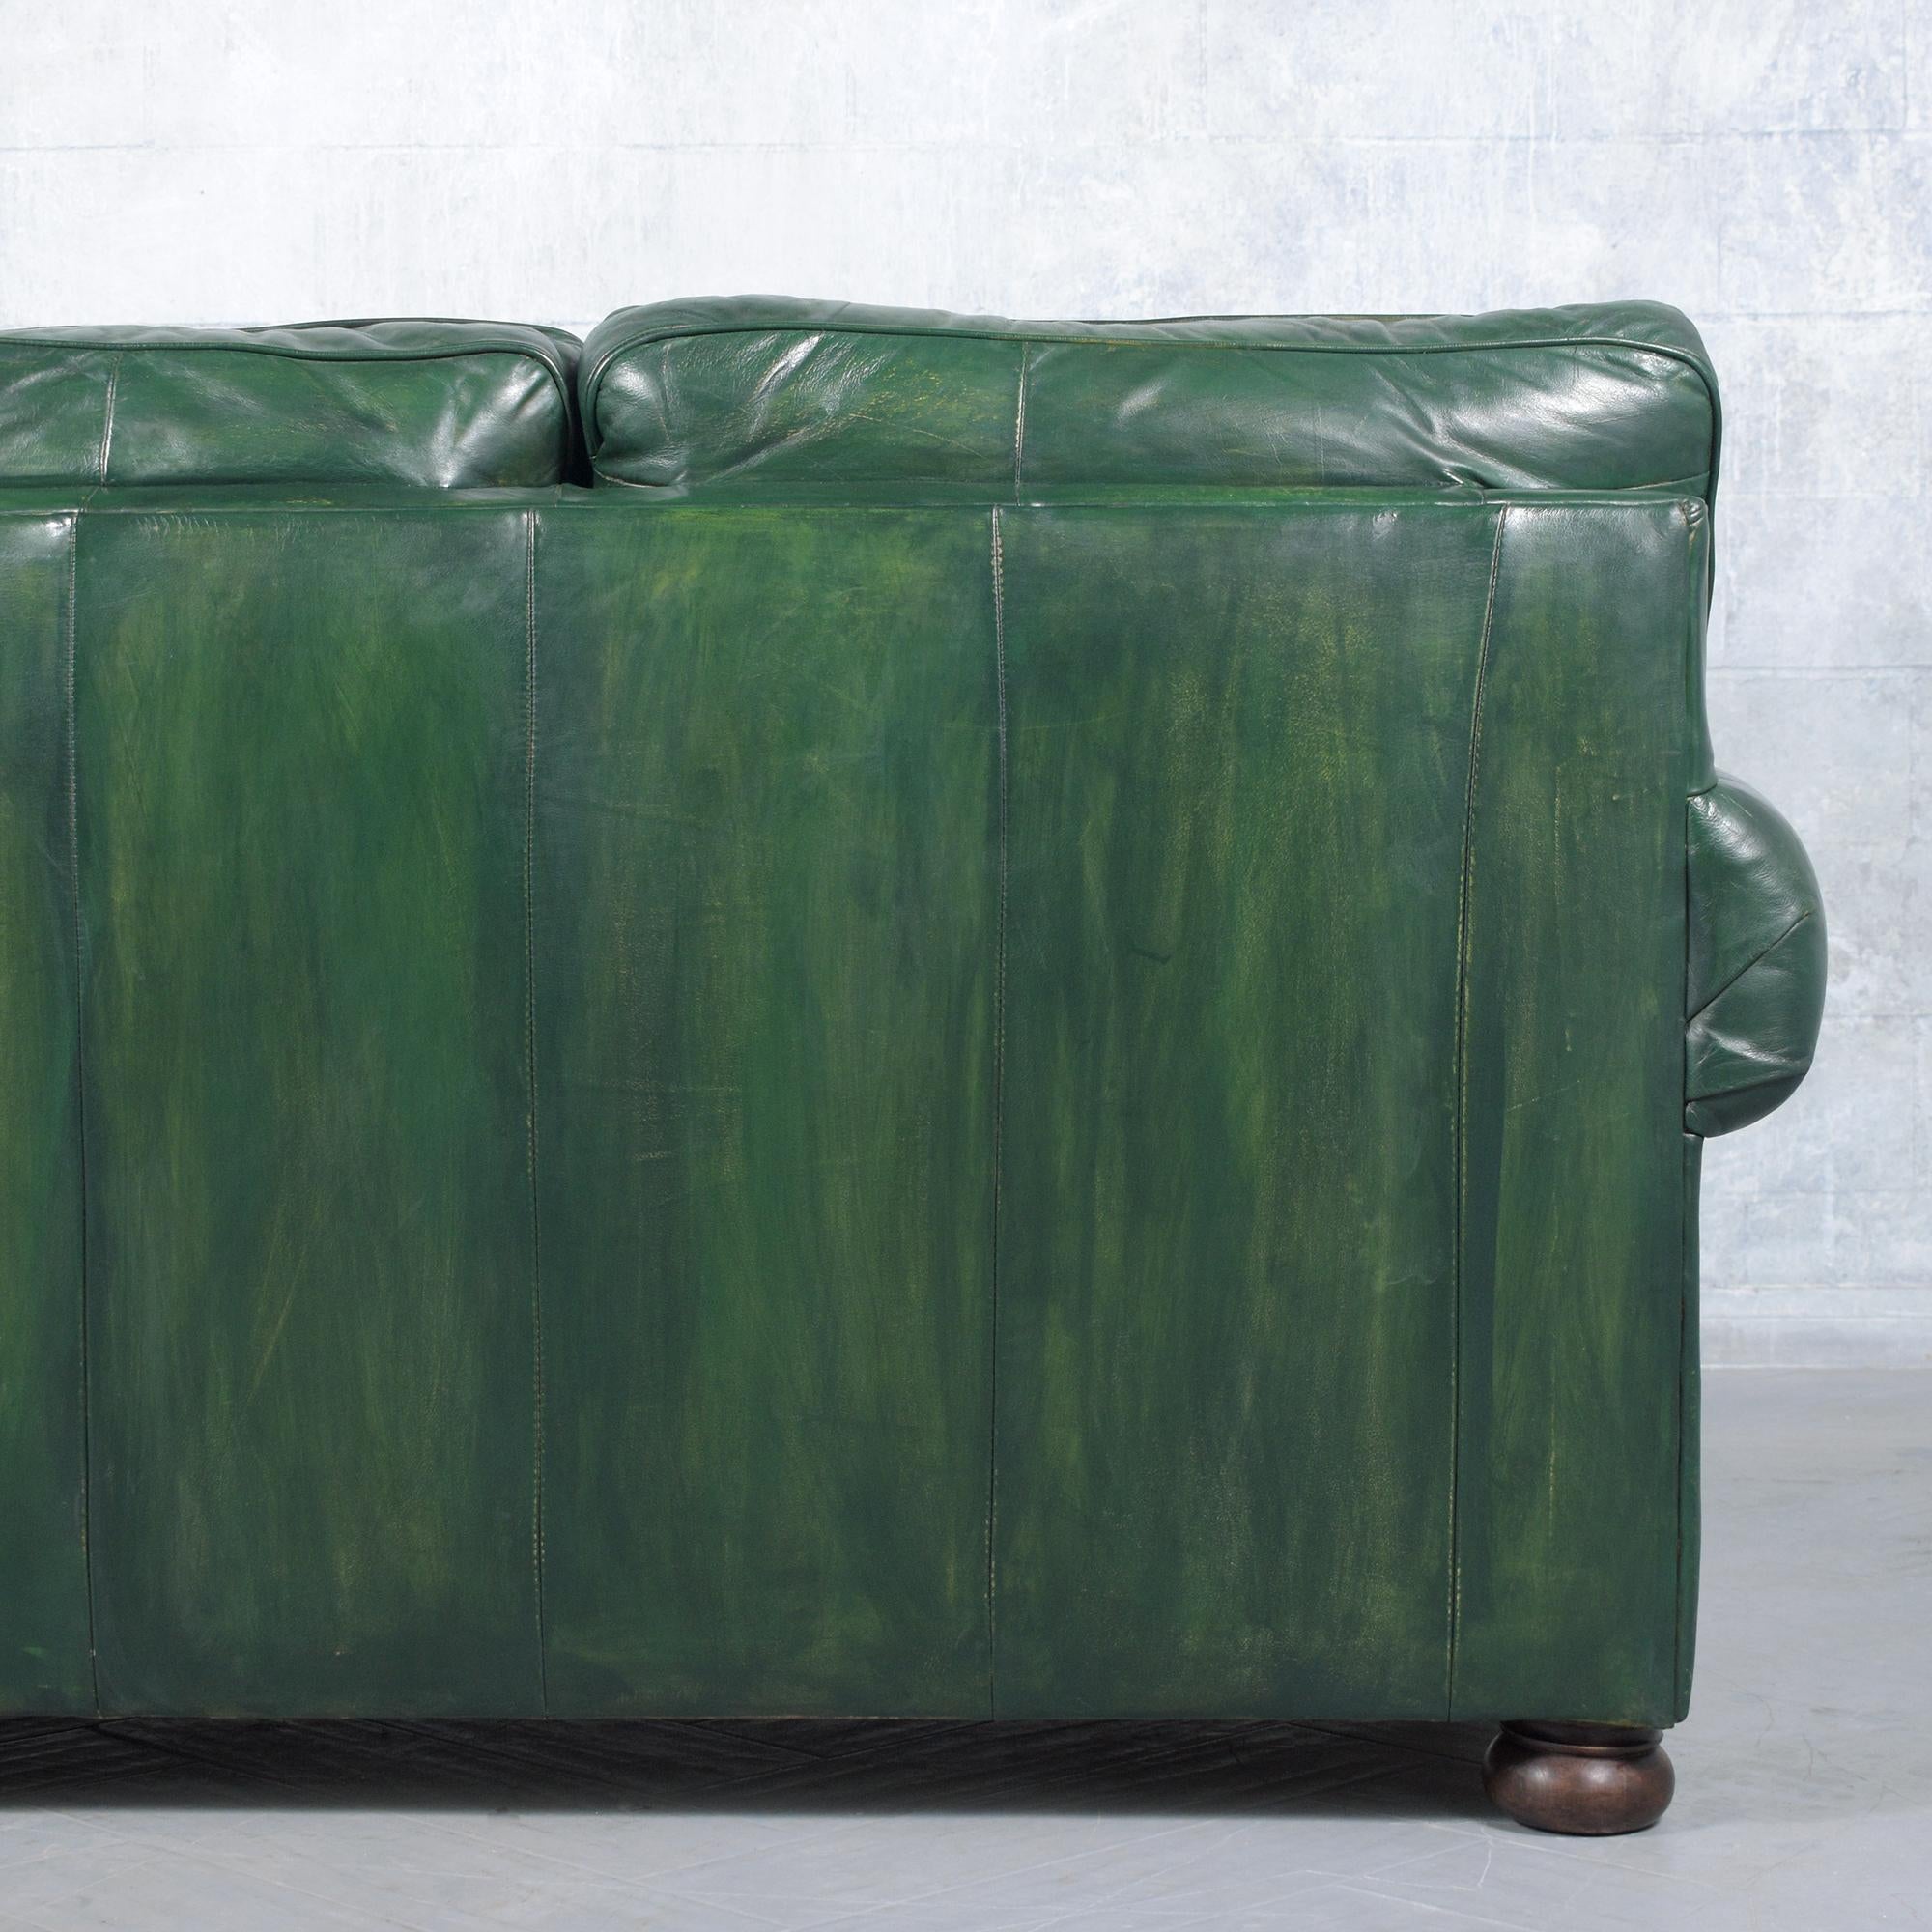 Elegant 1980s Restored Leather Sofa: A Blend of Vintage and Modern For Sale 7